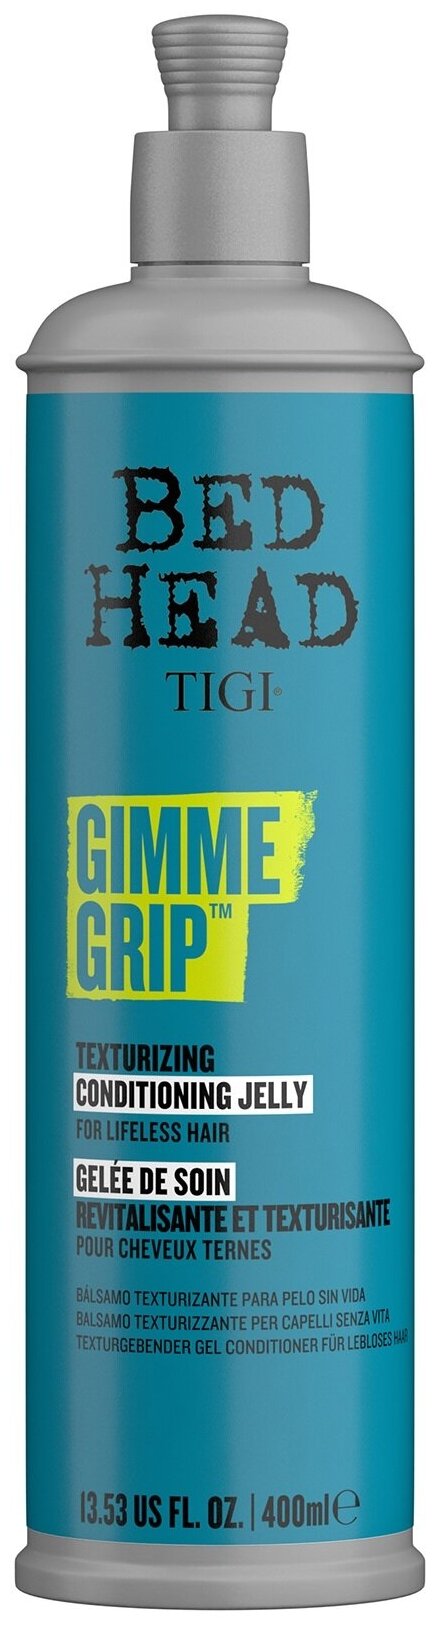 Текстурирующий кондиционер для волос gimme grip Tigi Bed Head Gimme Grip Texturizing Conditioner /100 мл/гр.